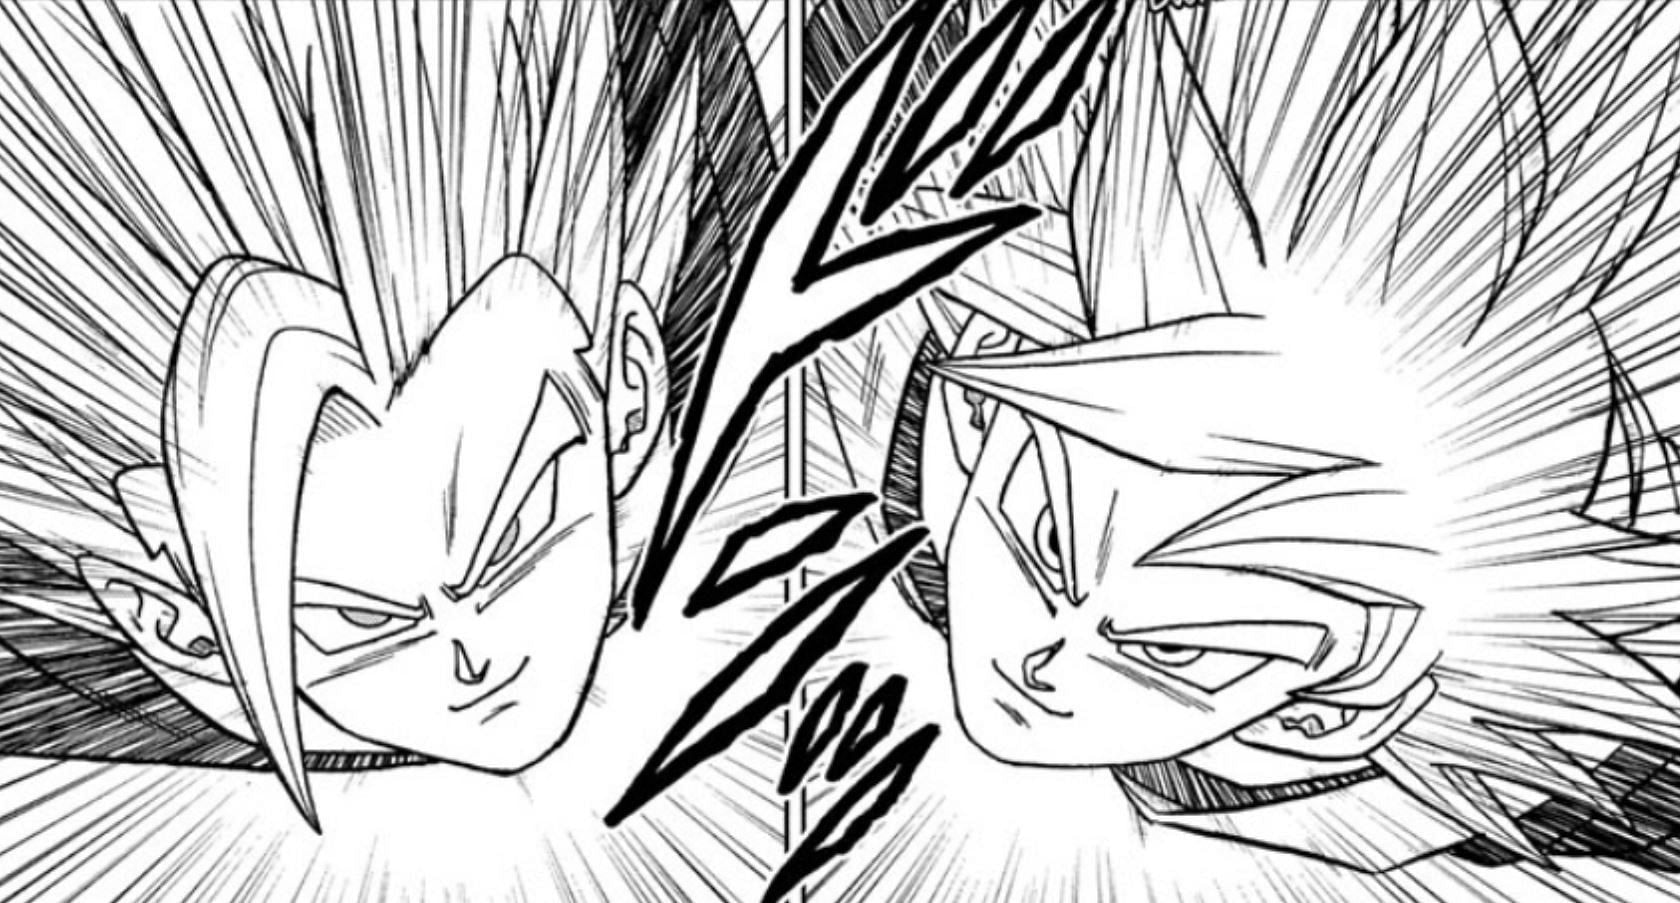 Dragon Ball Super chapter 103 first preview shows Goku vs Gohan